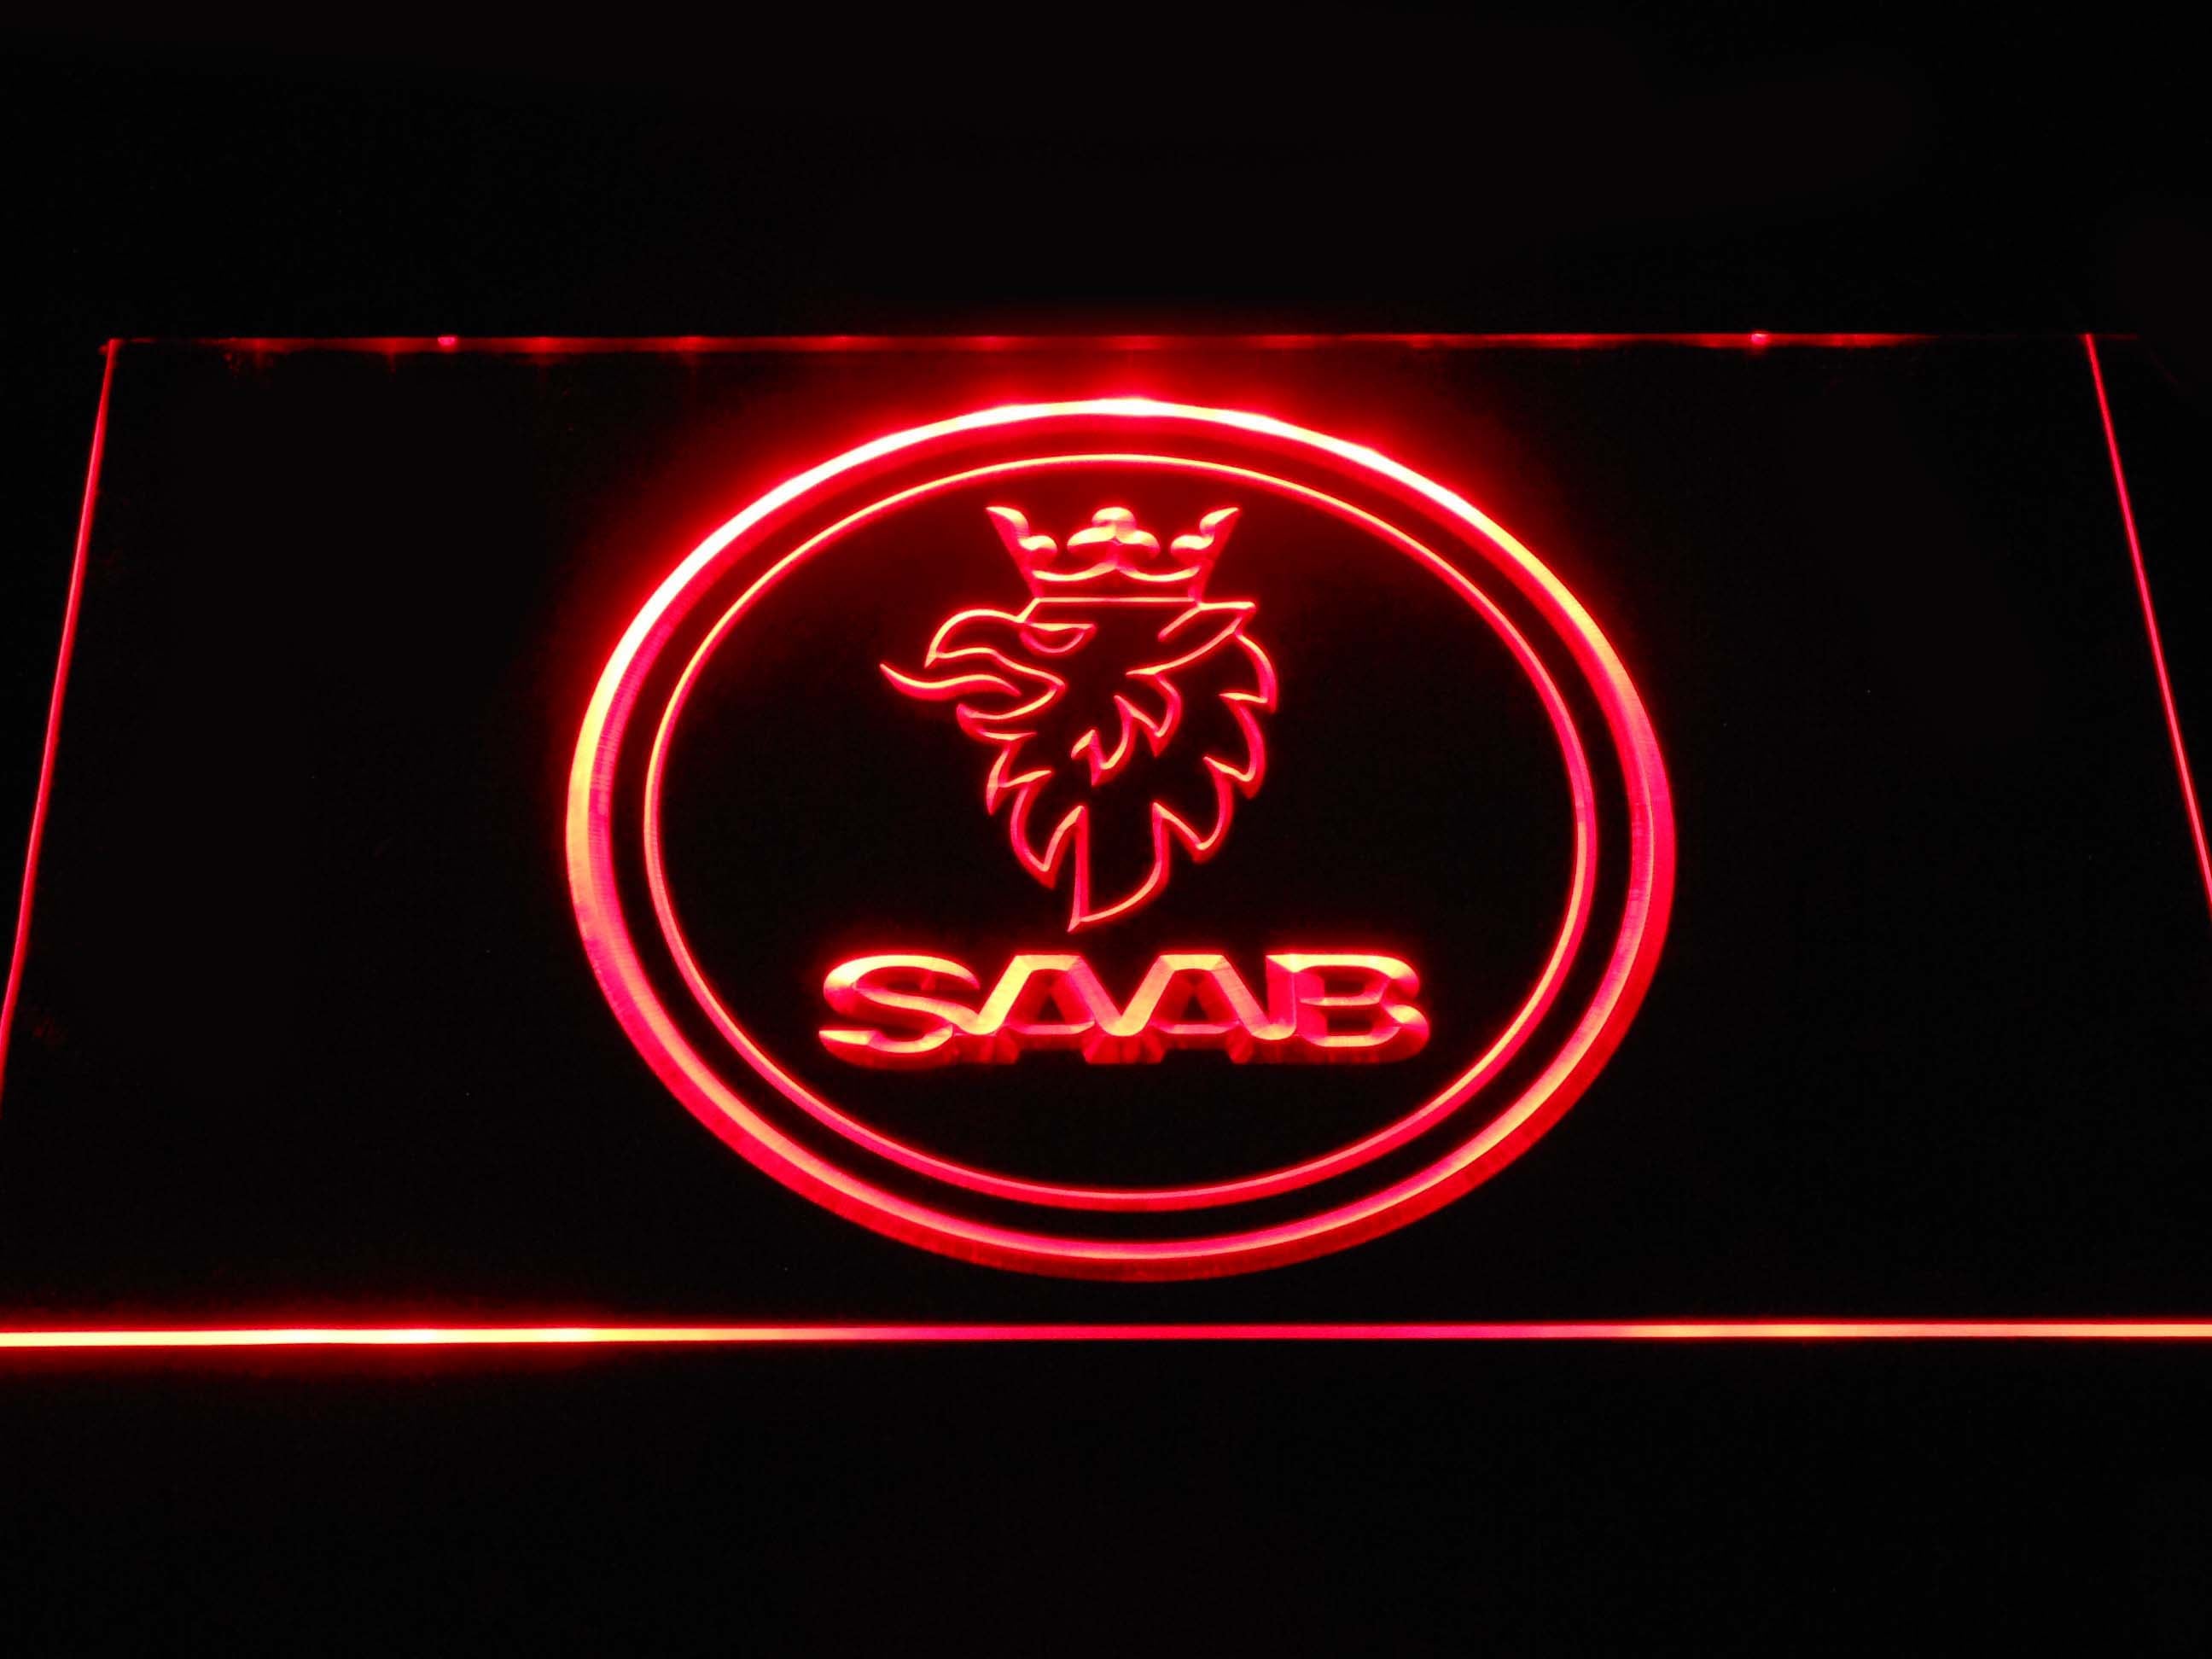 Saab Emblem Neon LED Light Sign